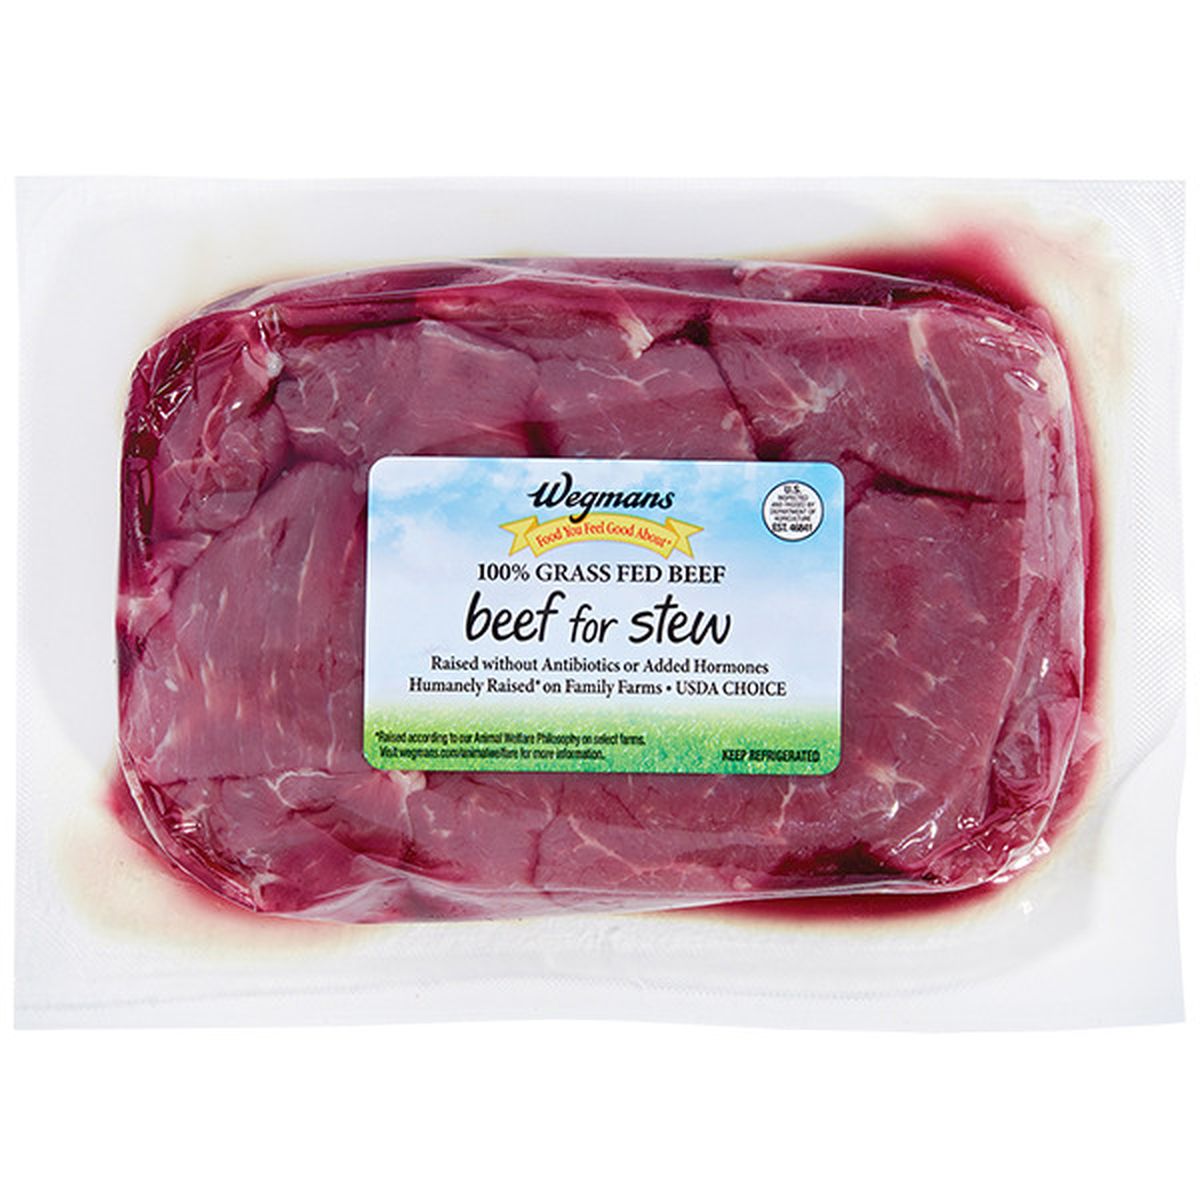 Calories in Wegmans 100% Grass Fed Beef for Stew